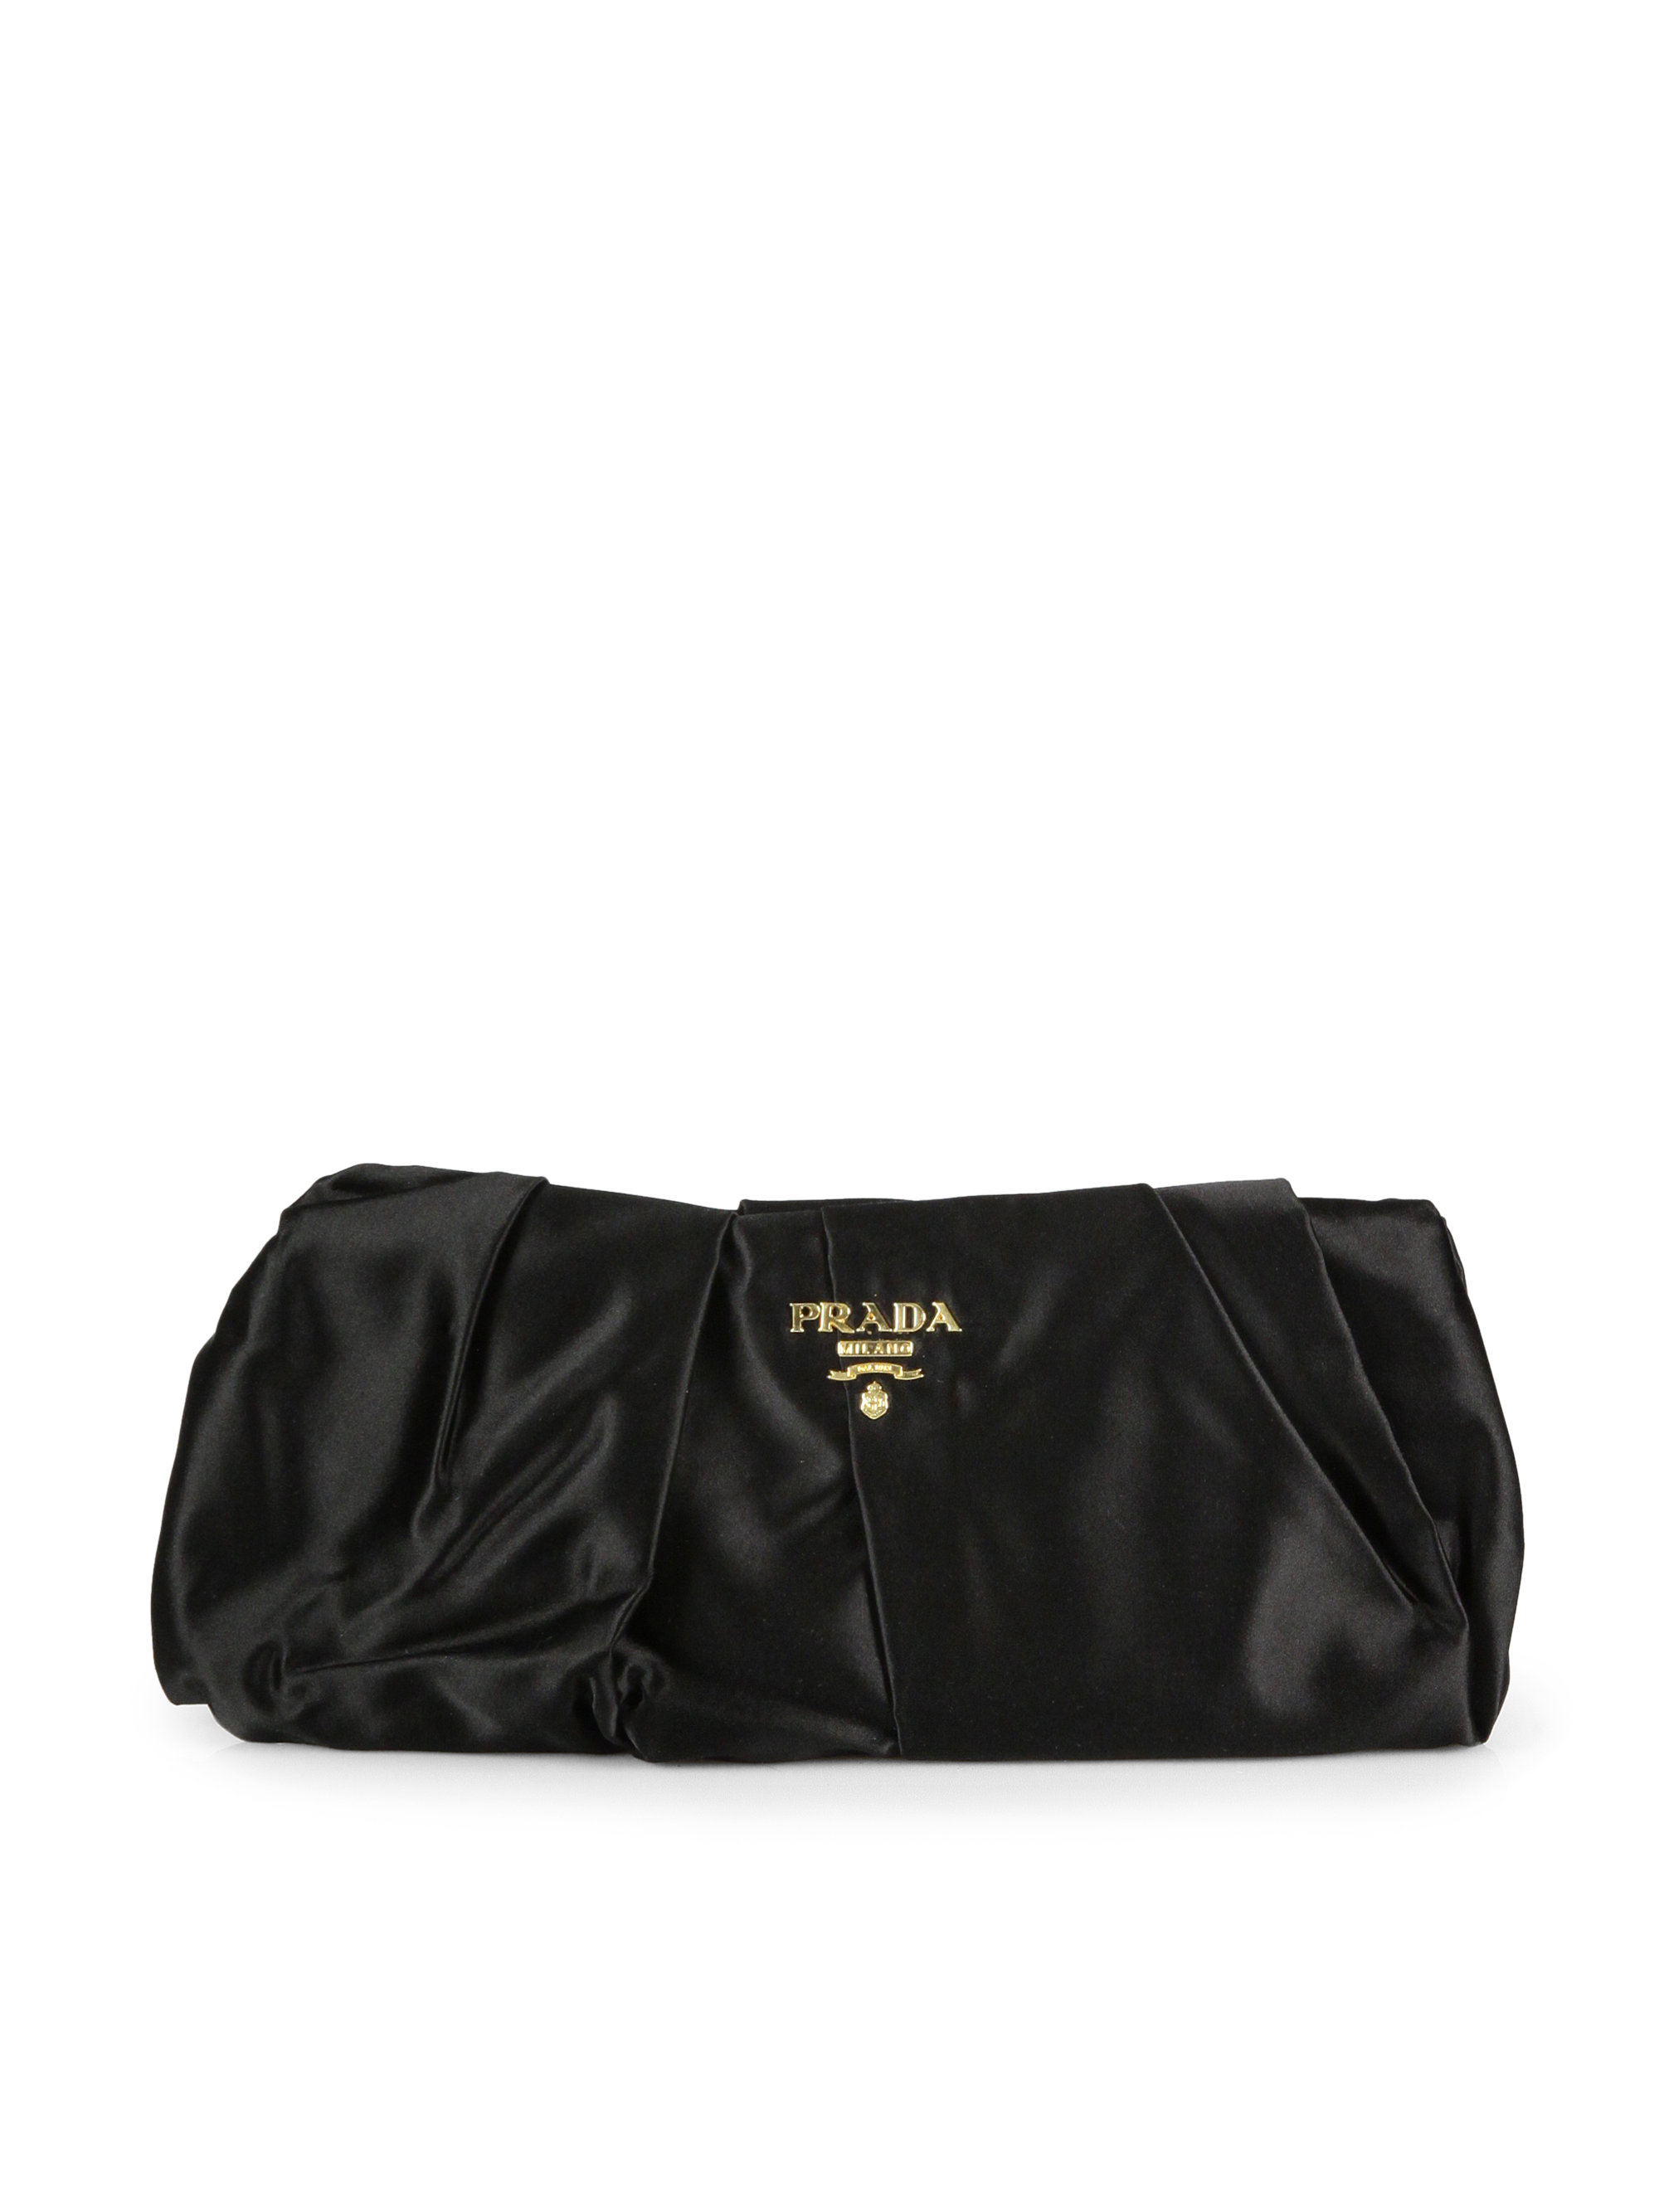 prada handbags online - Prada Pleated Satin Clutch in Black (nero-black) | Lyst